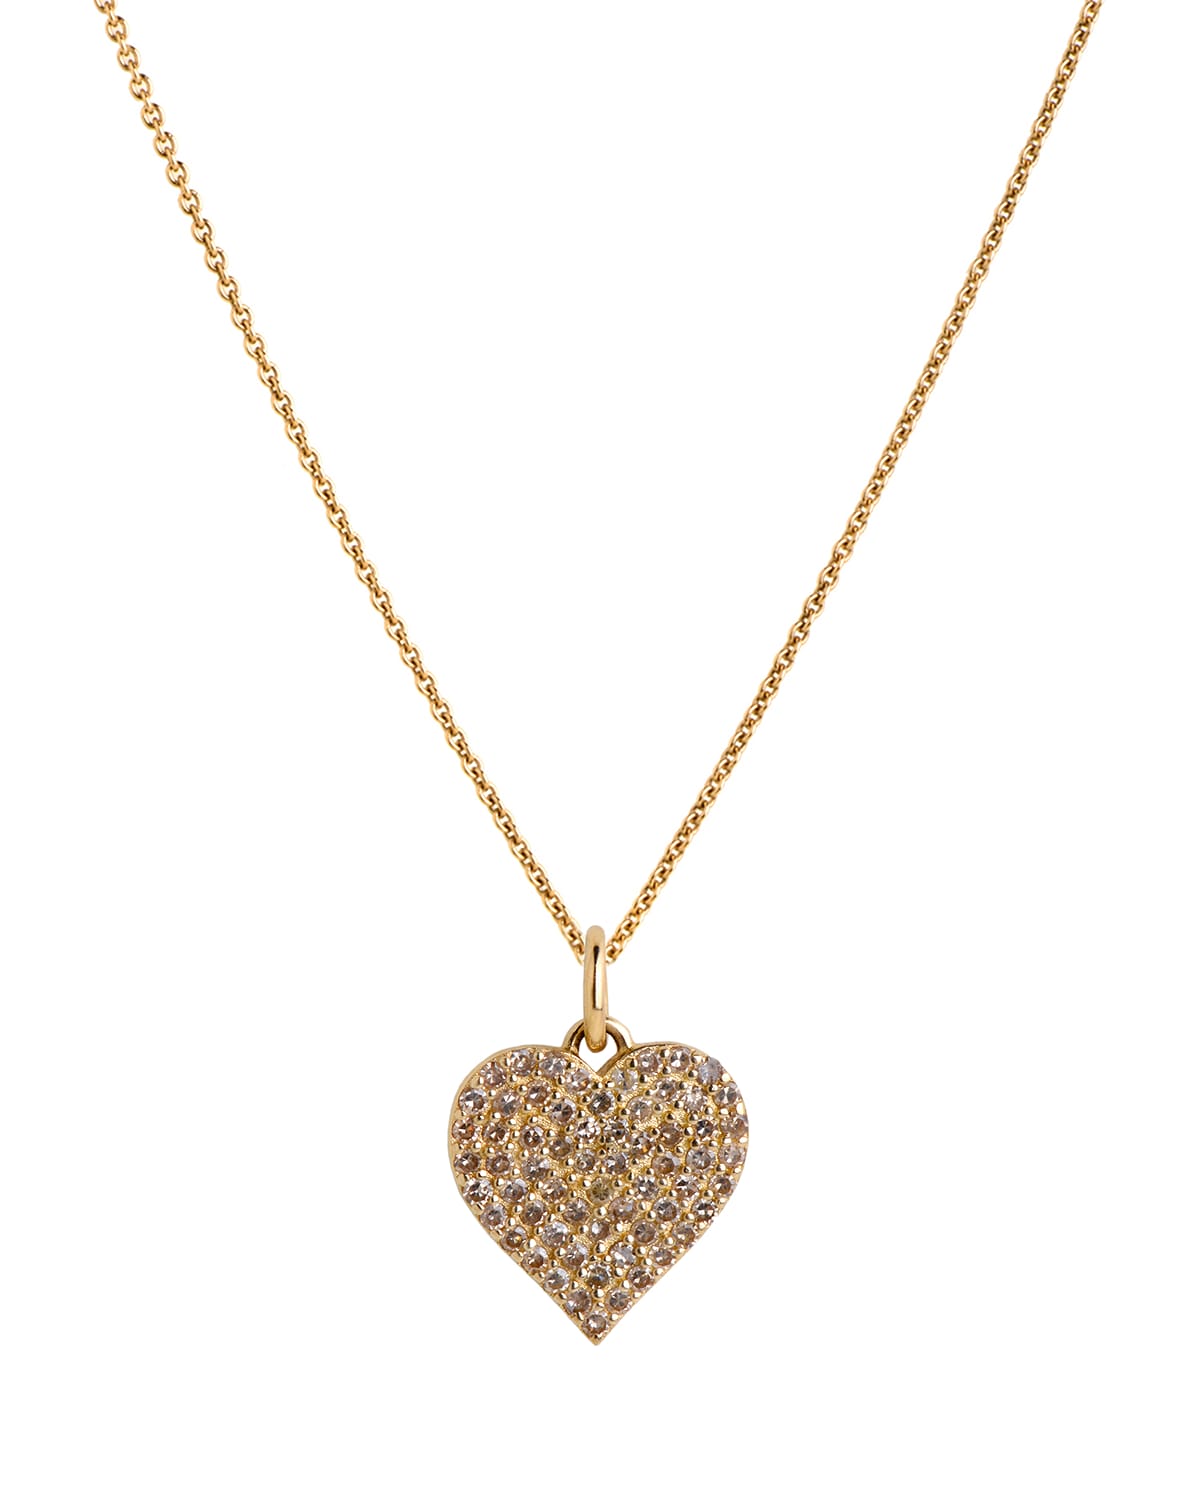 Bridget King Jewelry 14 Diamond Heart Necklace